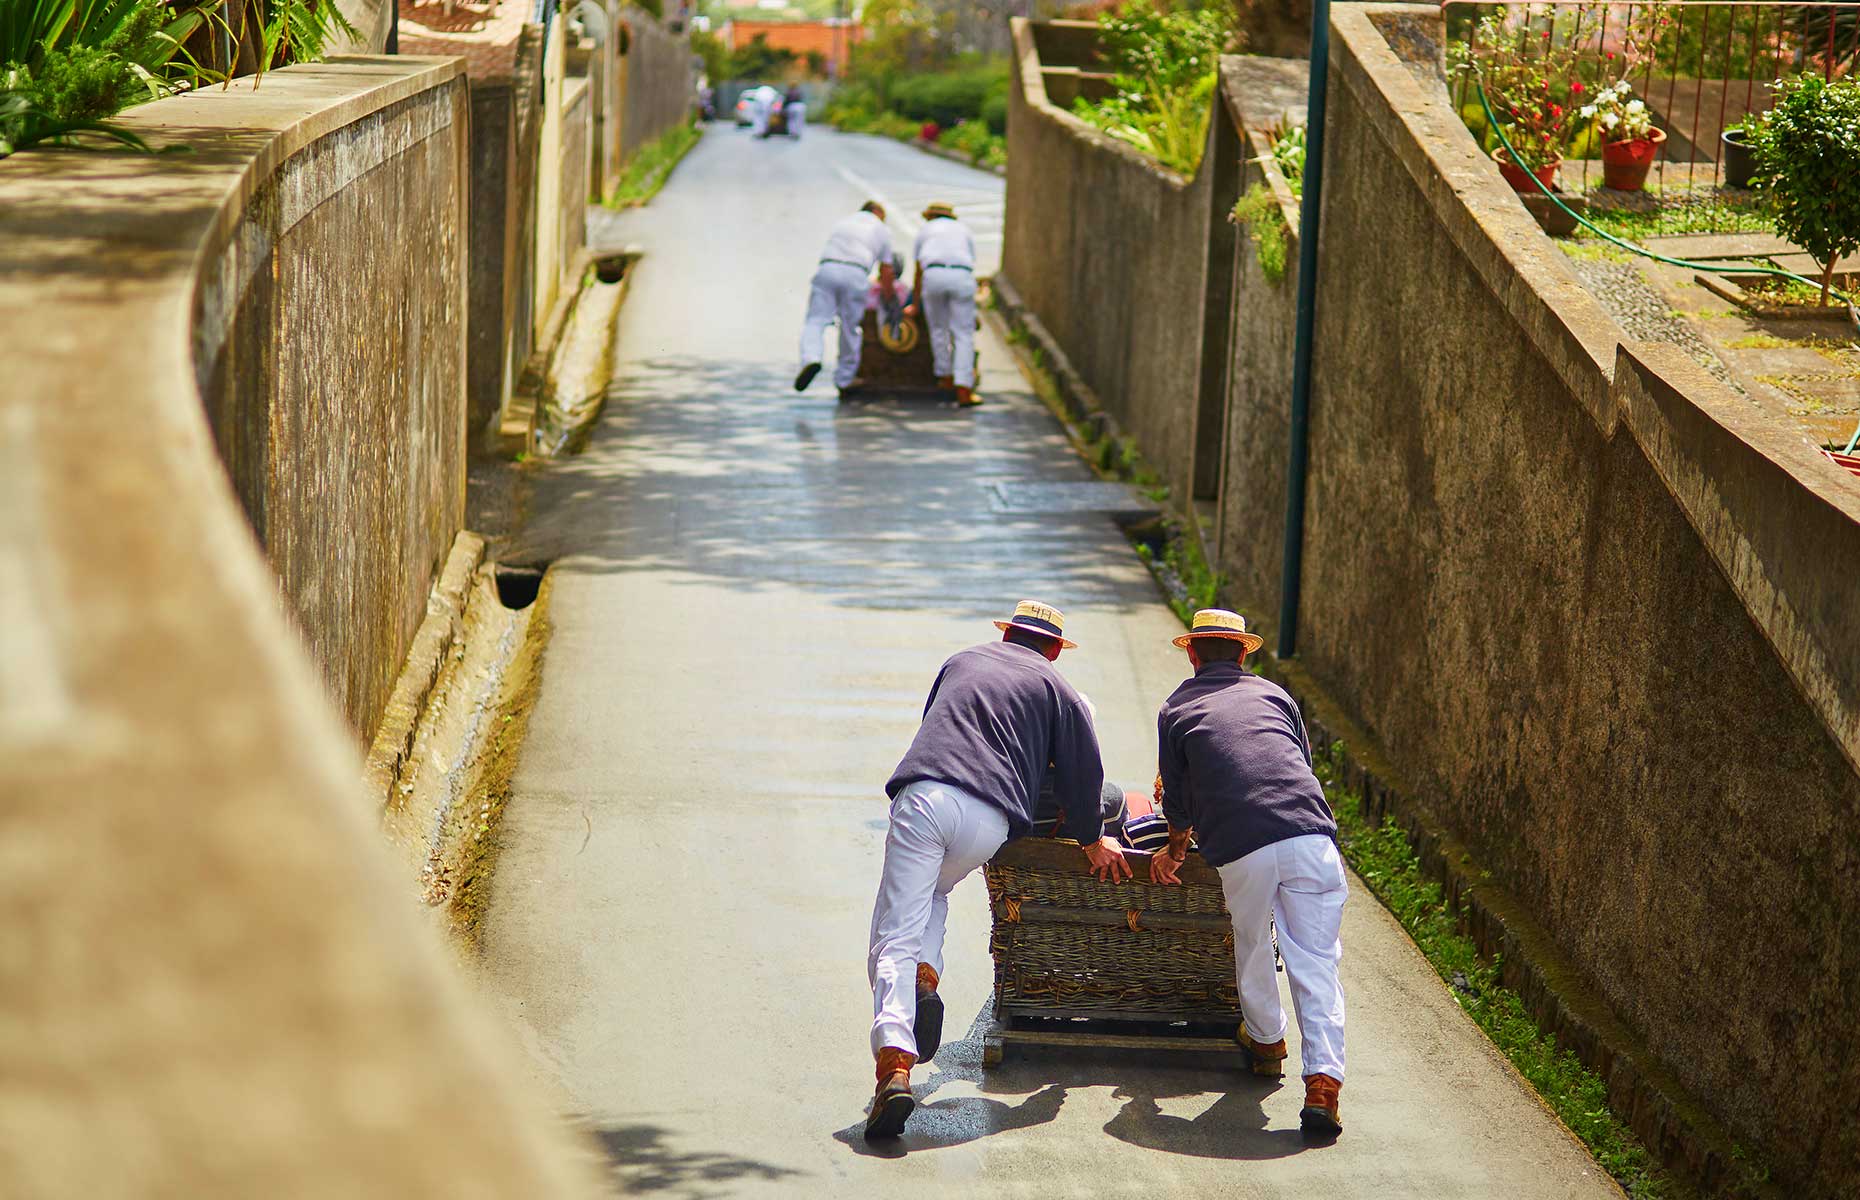 Tabogganing in Funchal (Image: Ekaterina Pokrovsky/Shutterstock)